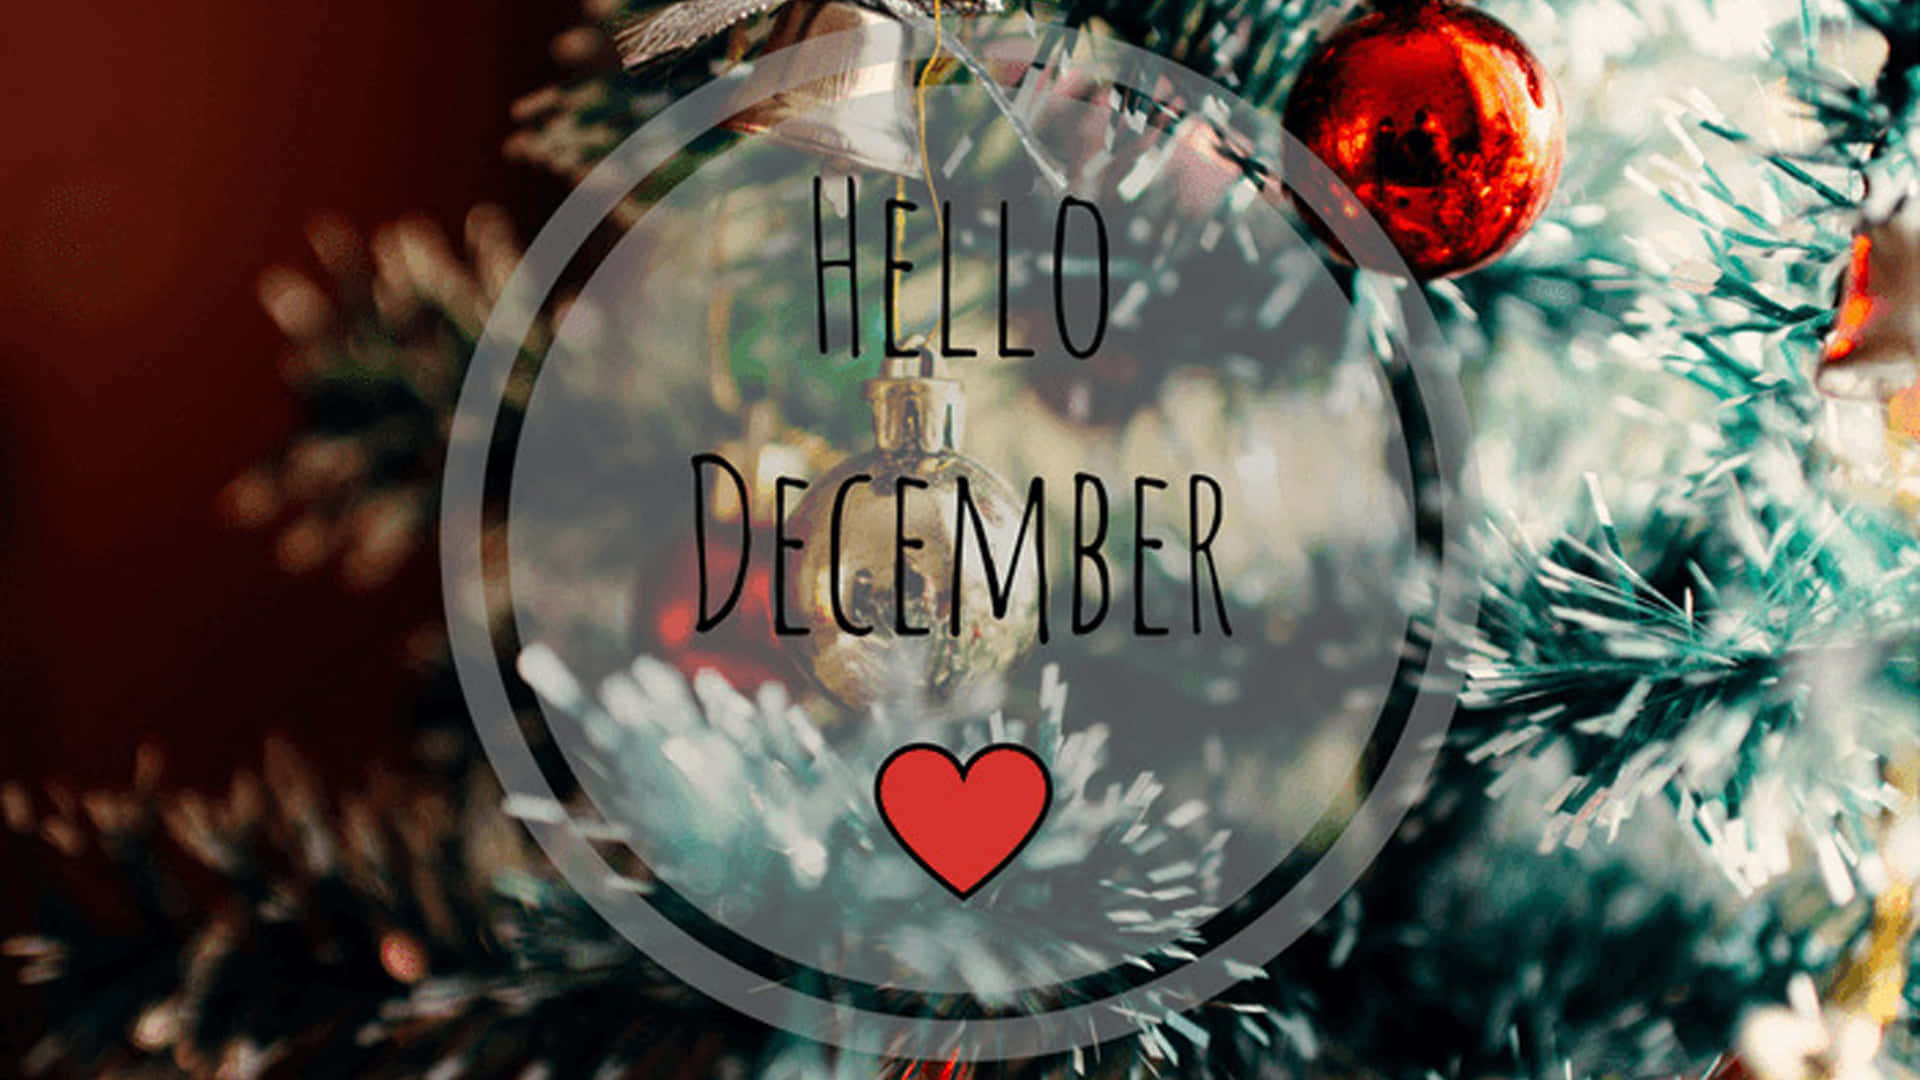 Hello December Holiday Theme Wallpaper